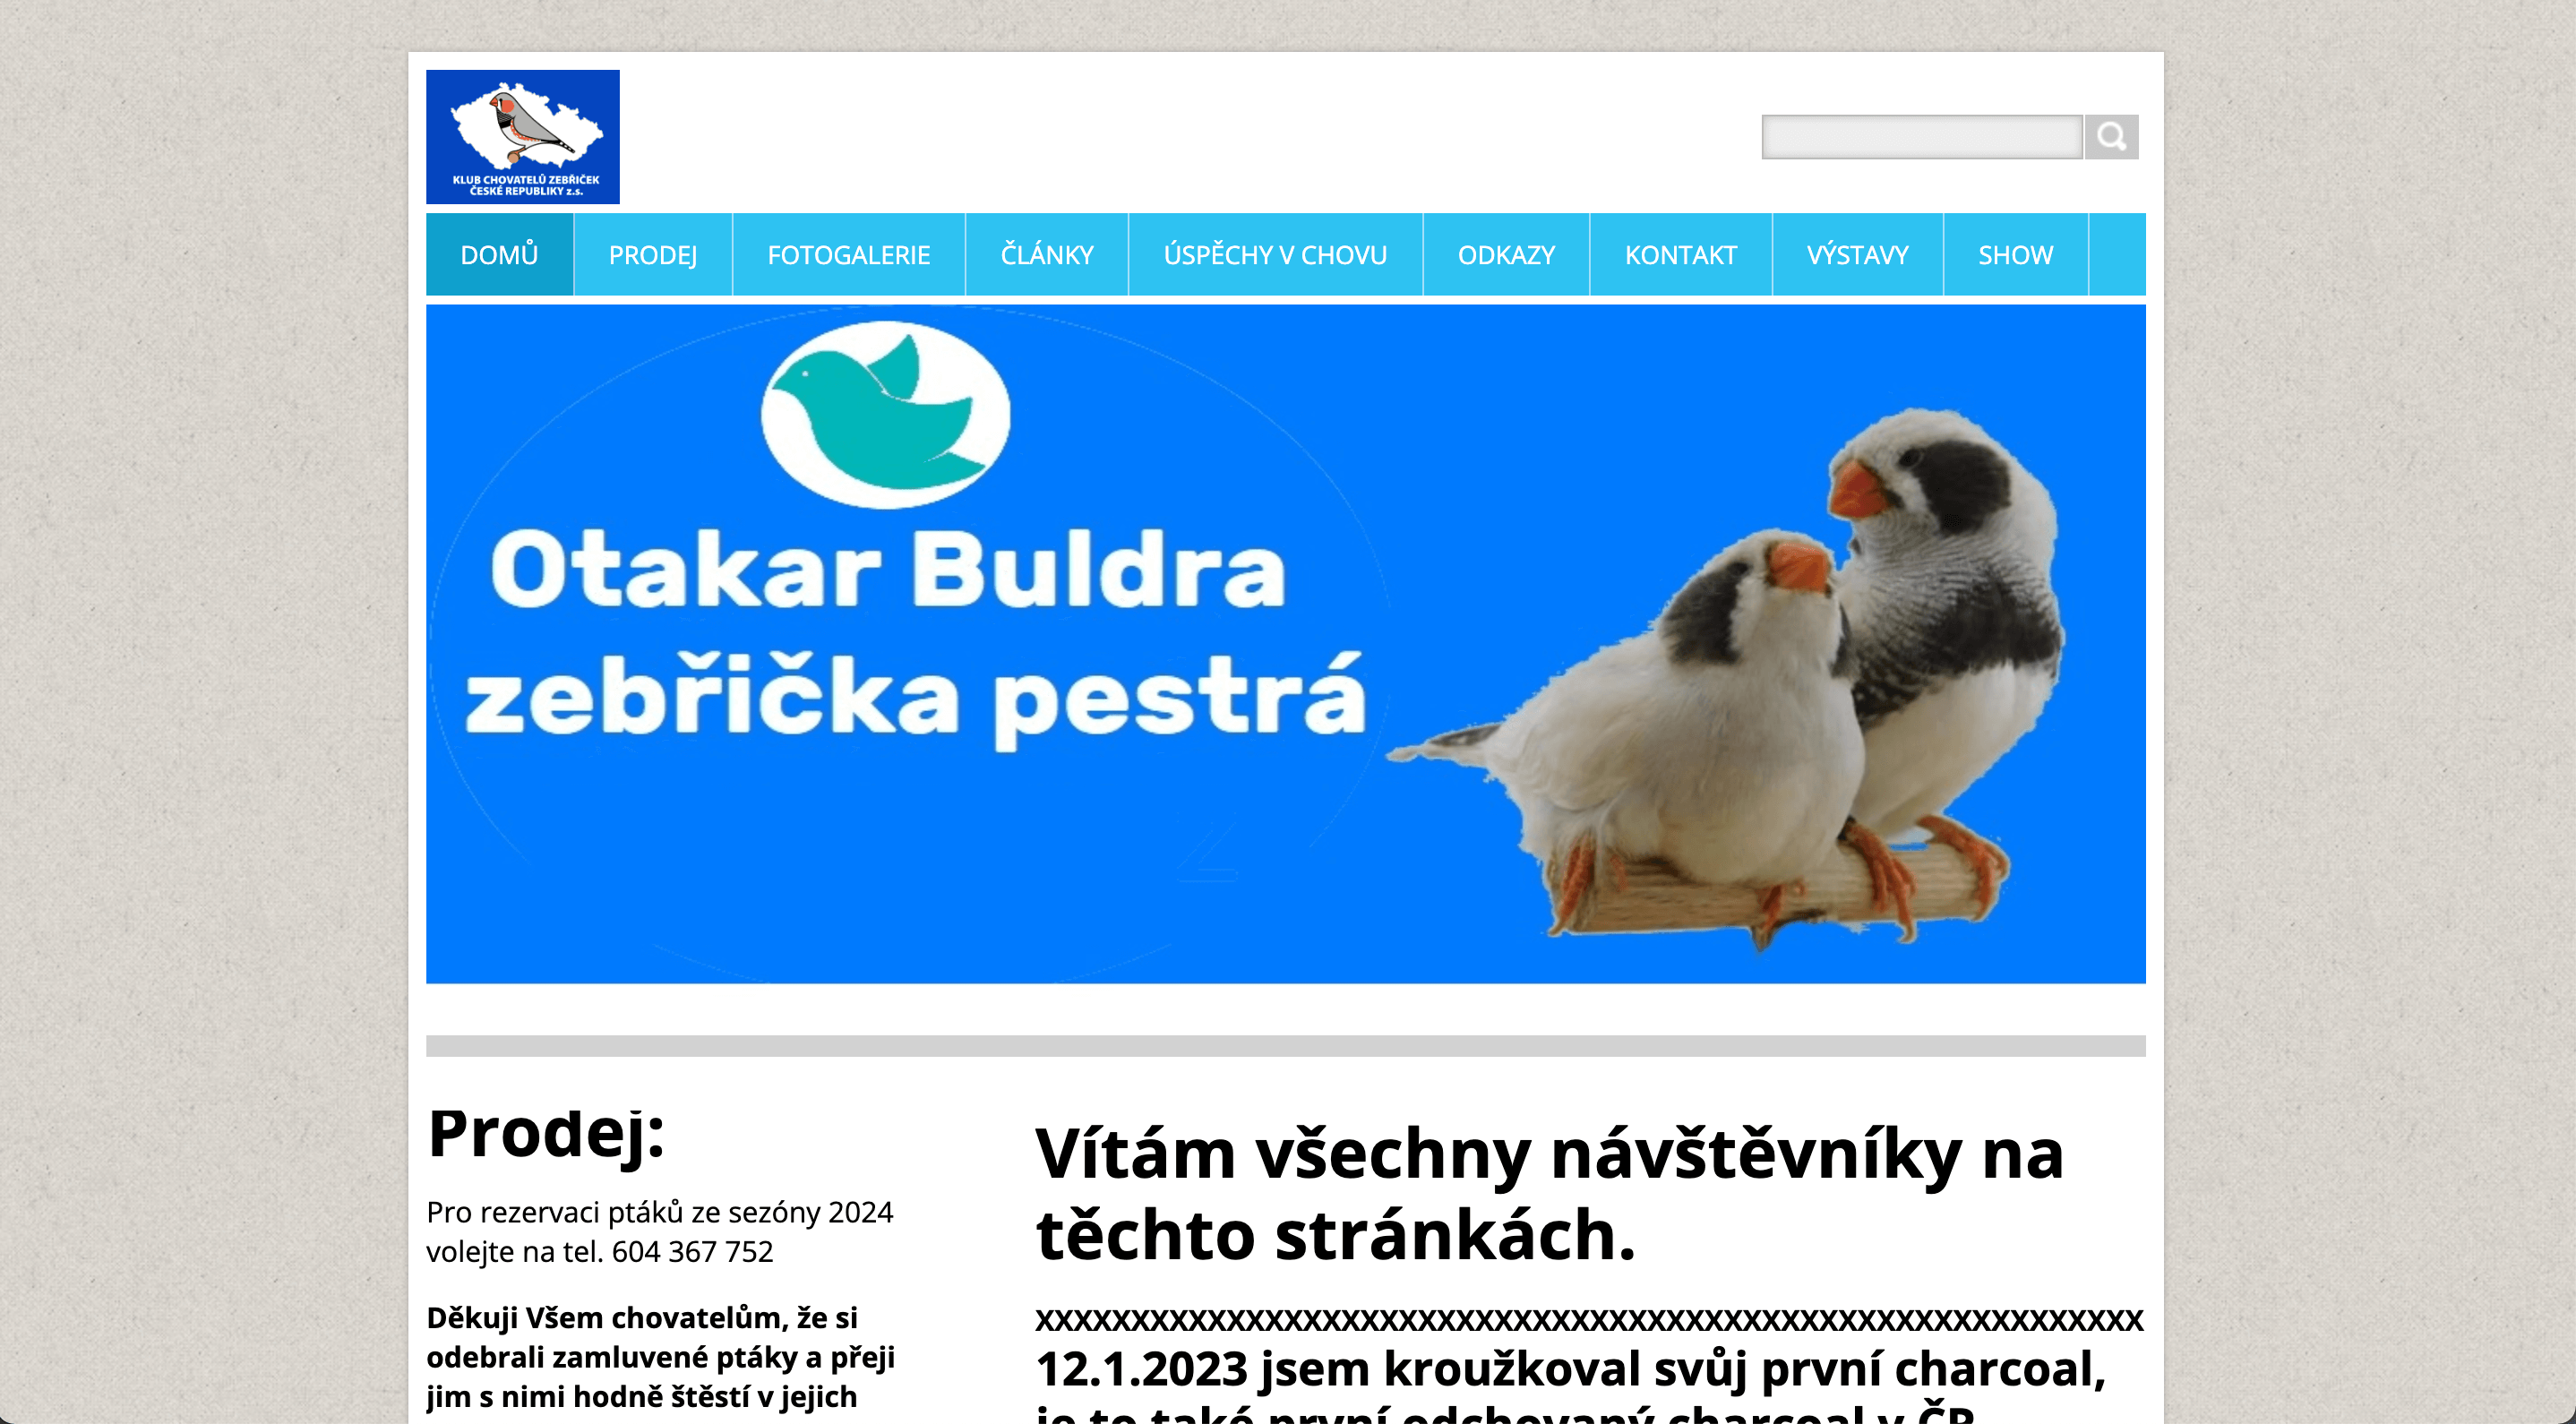 https://zebricka-pestra-otakar-buldra.webnode.cz/